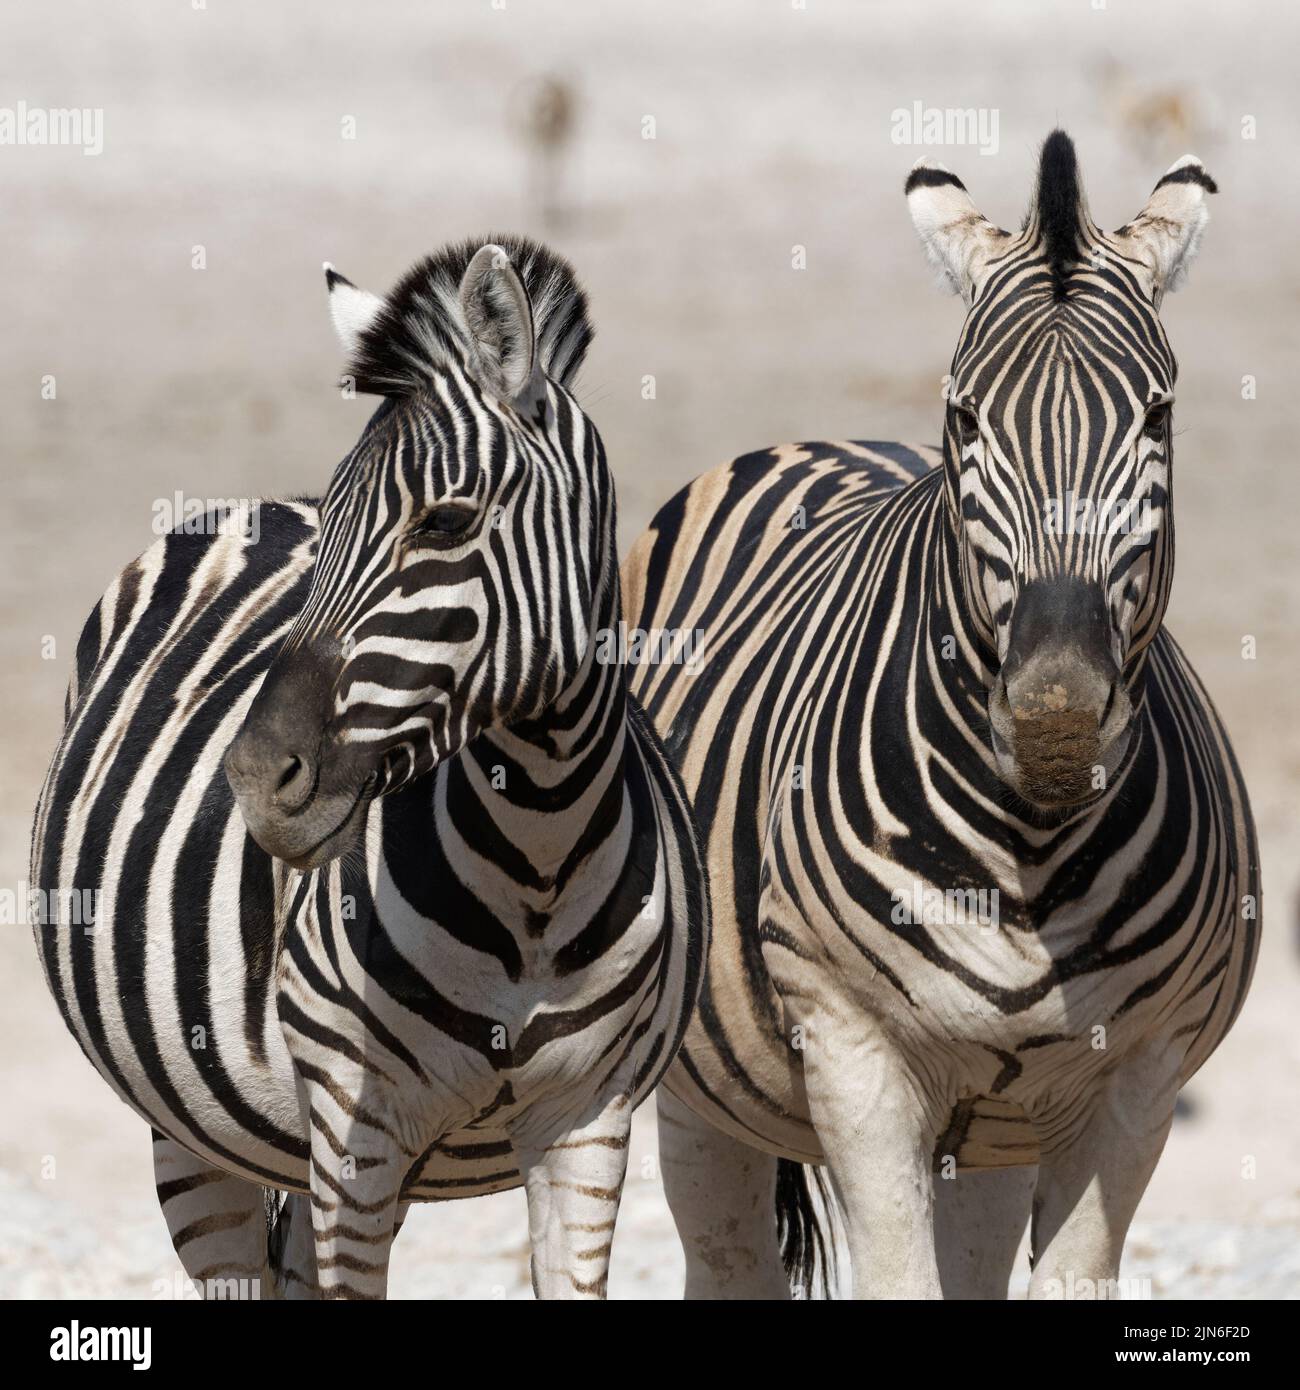 Burchell's zebras (Equus quagga burchellii), pair of zebras, standing side by side, animals portrait, Etosha National Park, Namibia, Africa Stock Photo